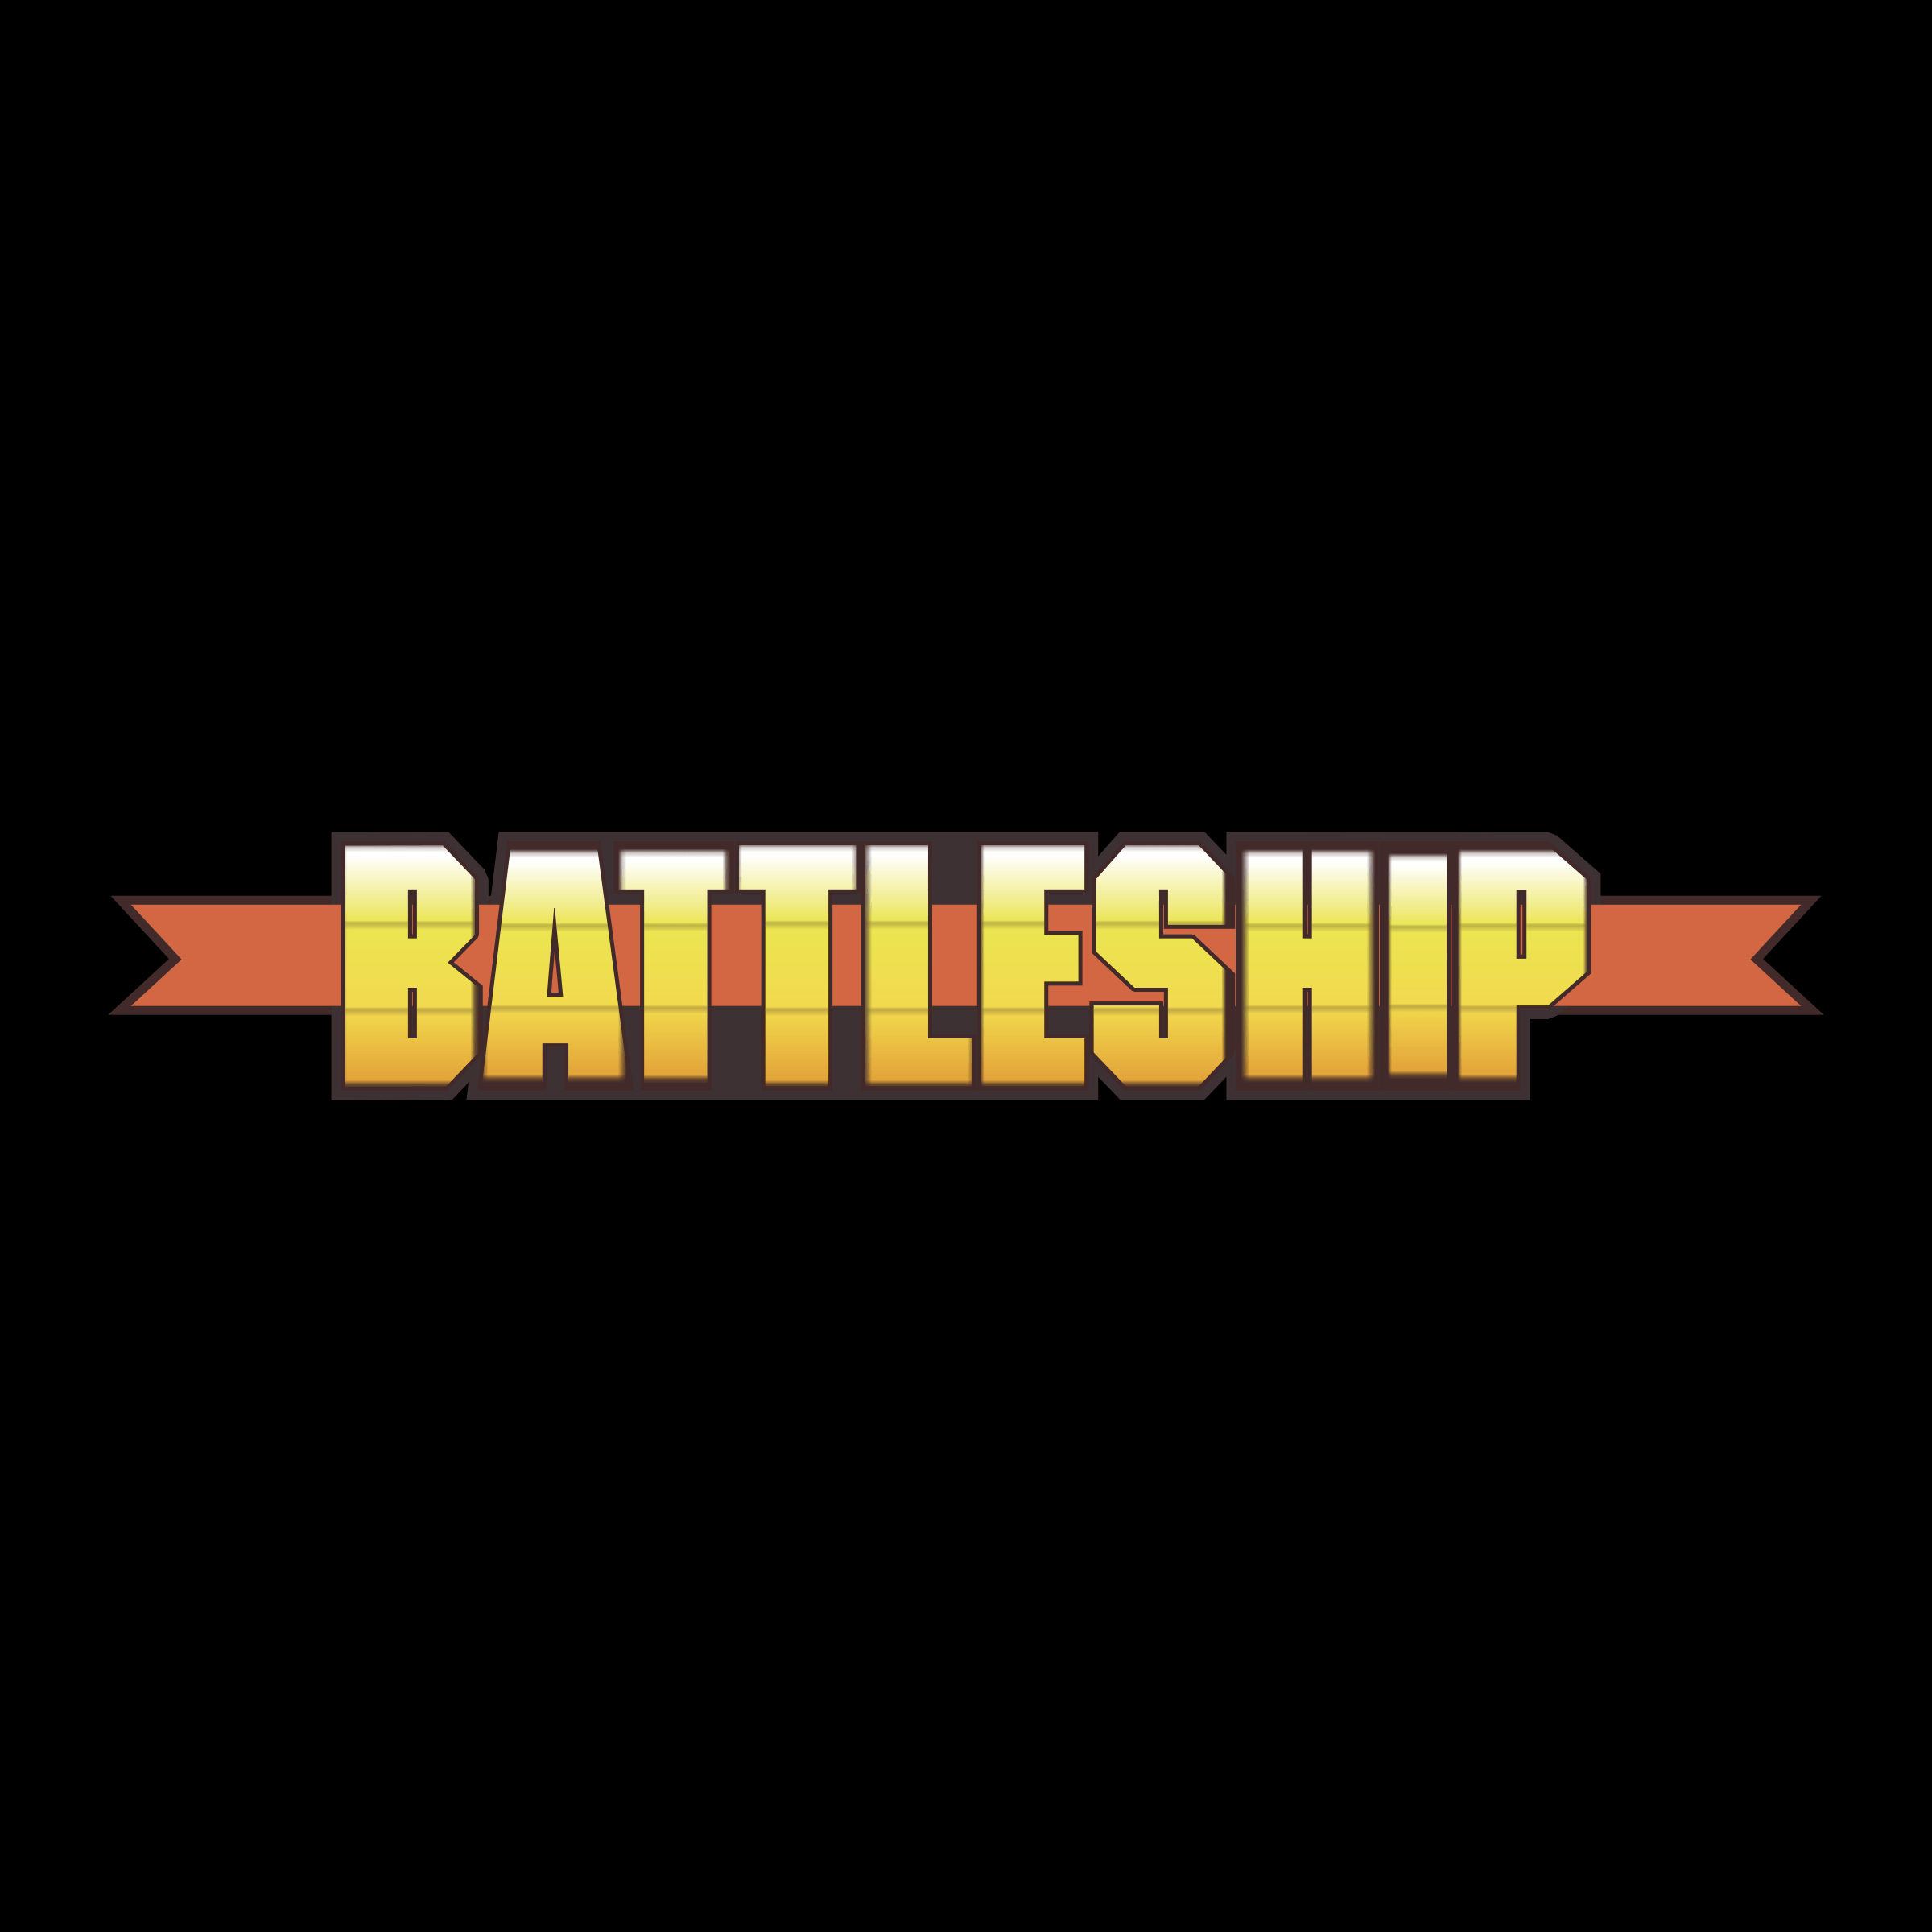 Battleship Logo - Battleship Logo PNG Transparent & SVG Vector - Freebie Supply